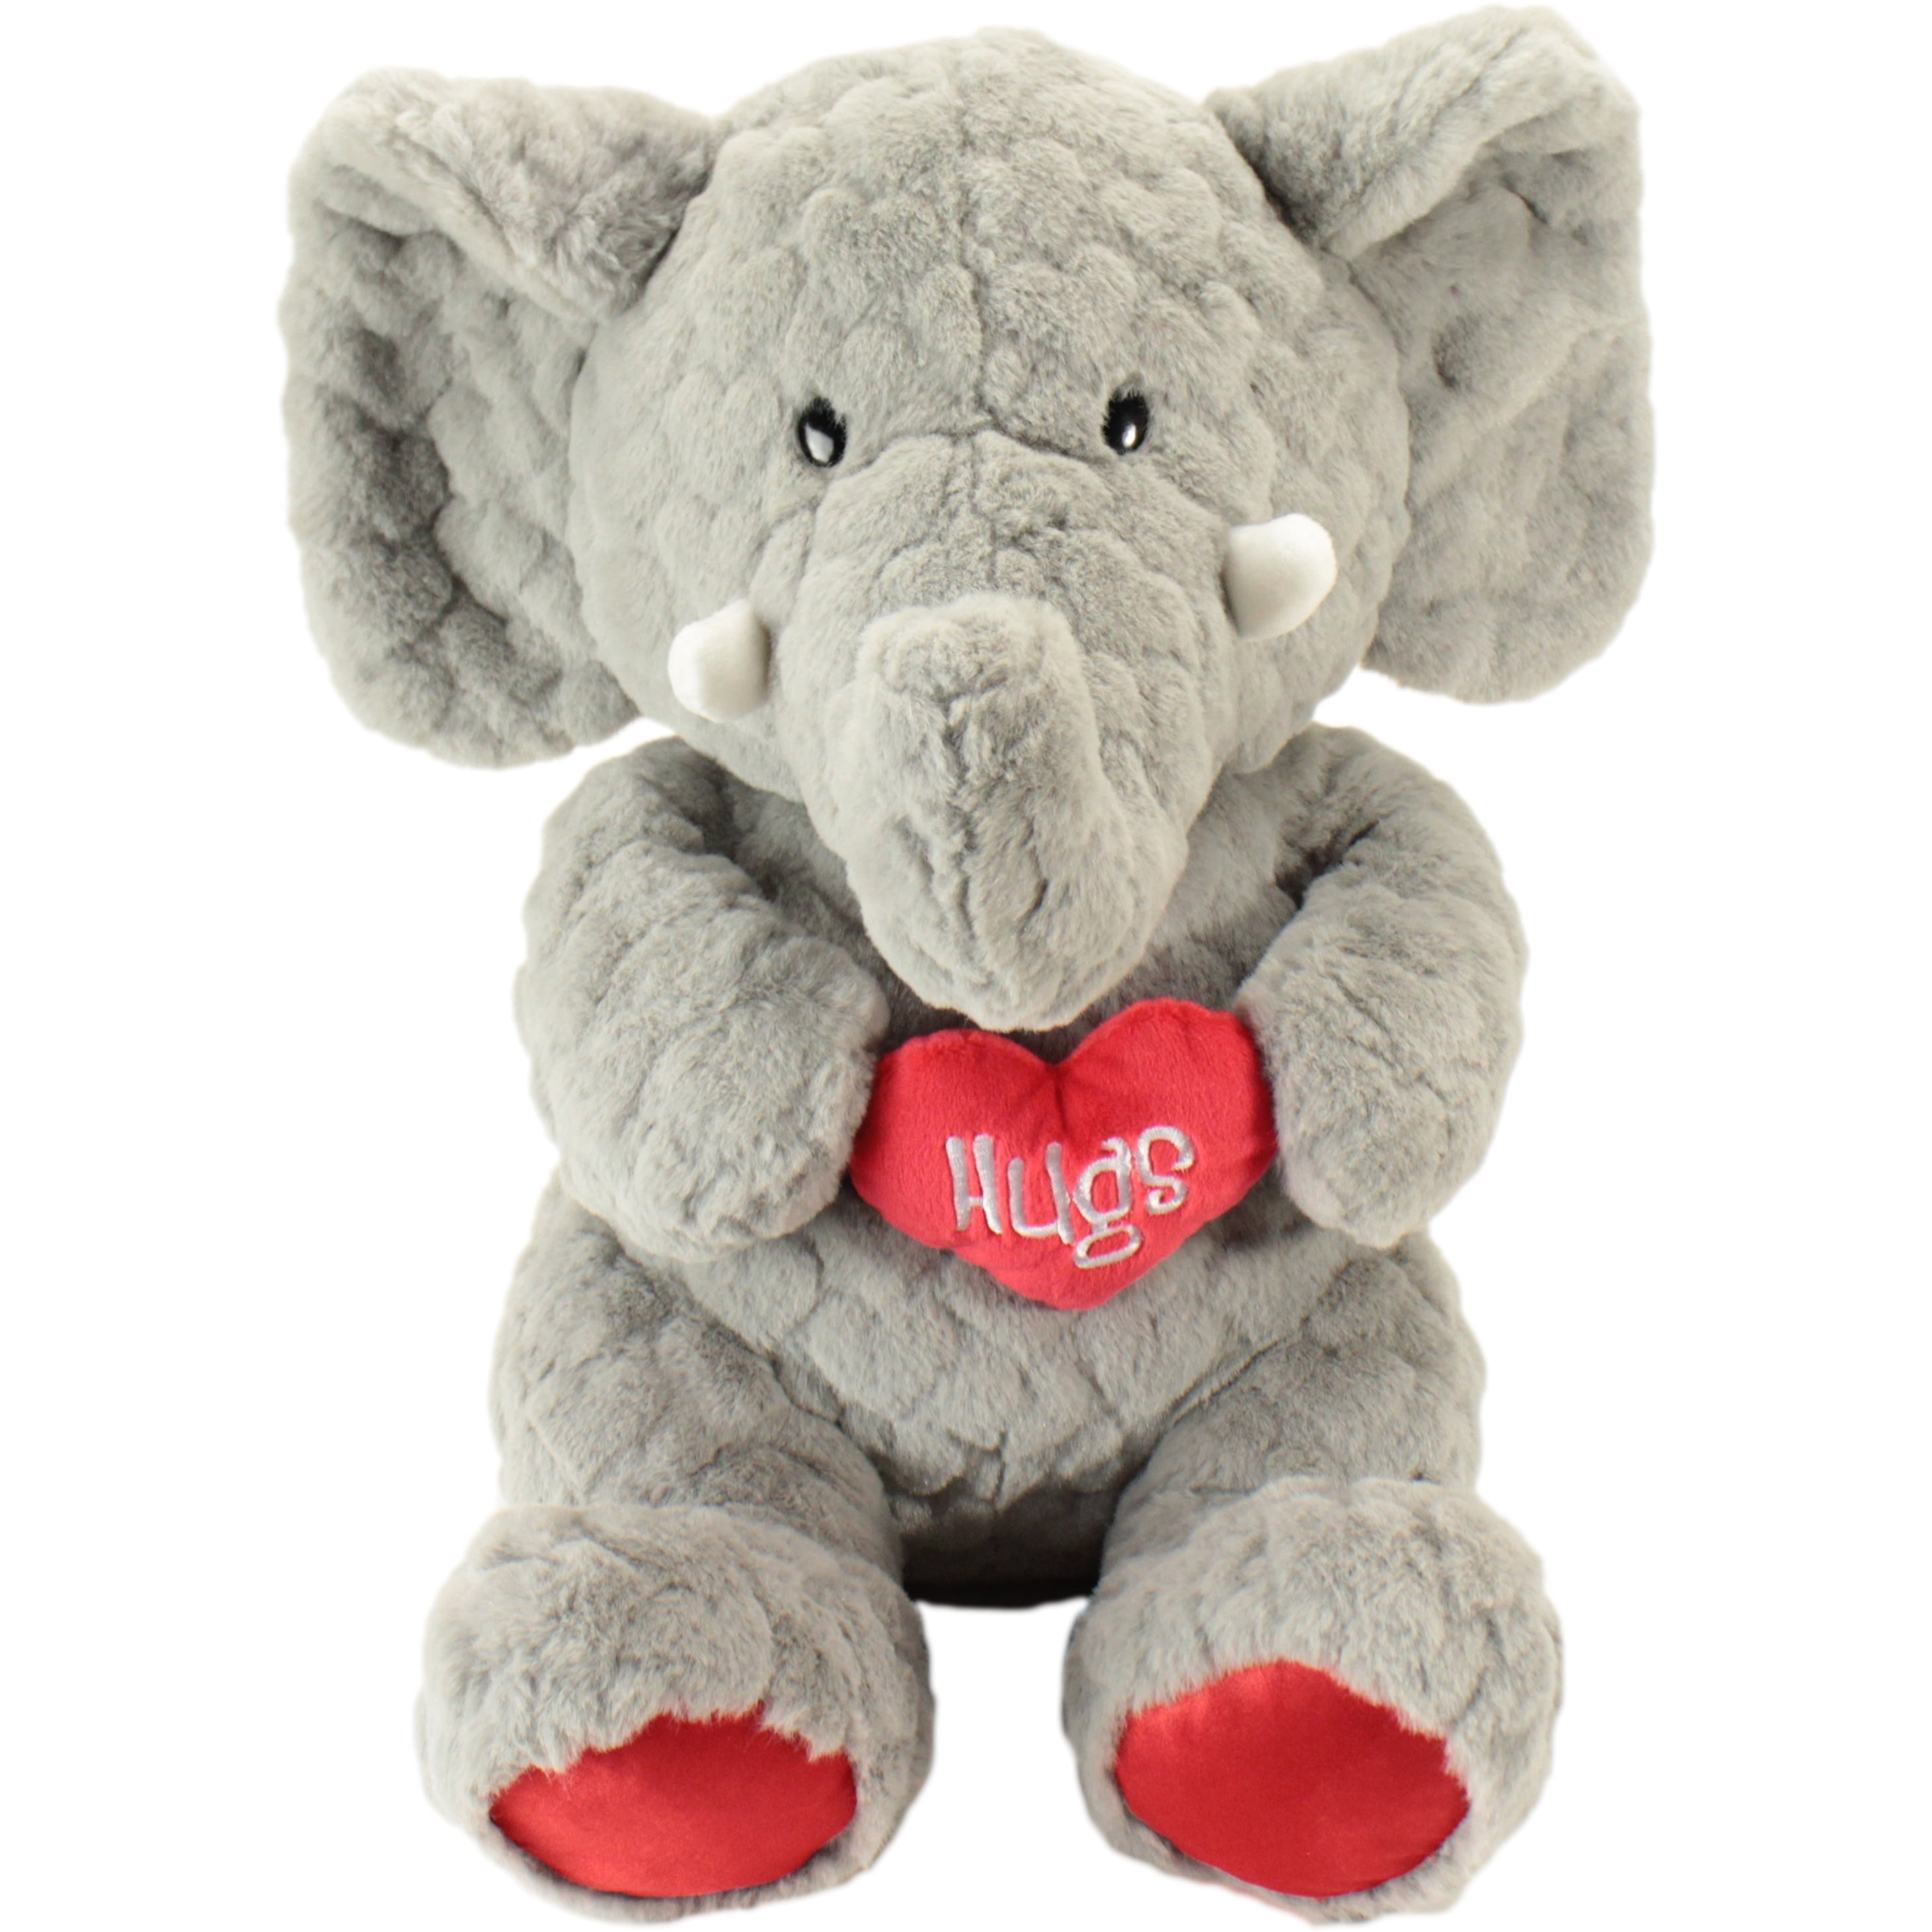 New Hug Fun 14.5 in Jungle Animal Elephant Grey Plush Toy Gift Valentine's Day 